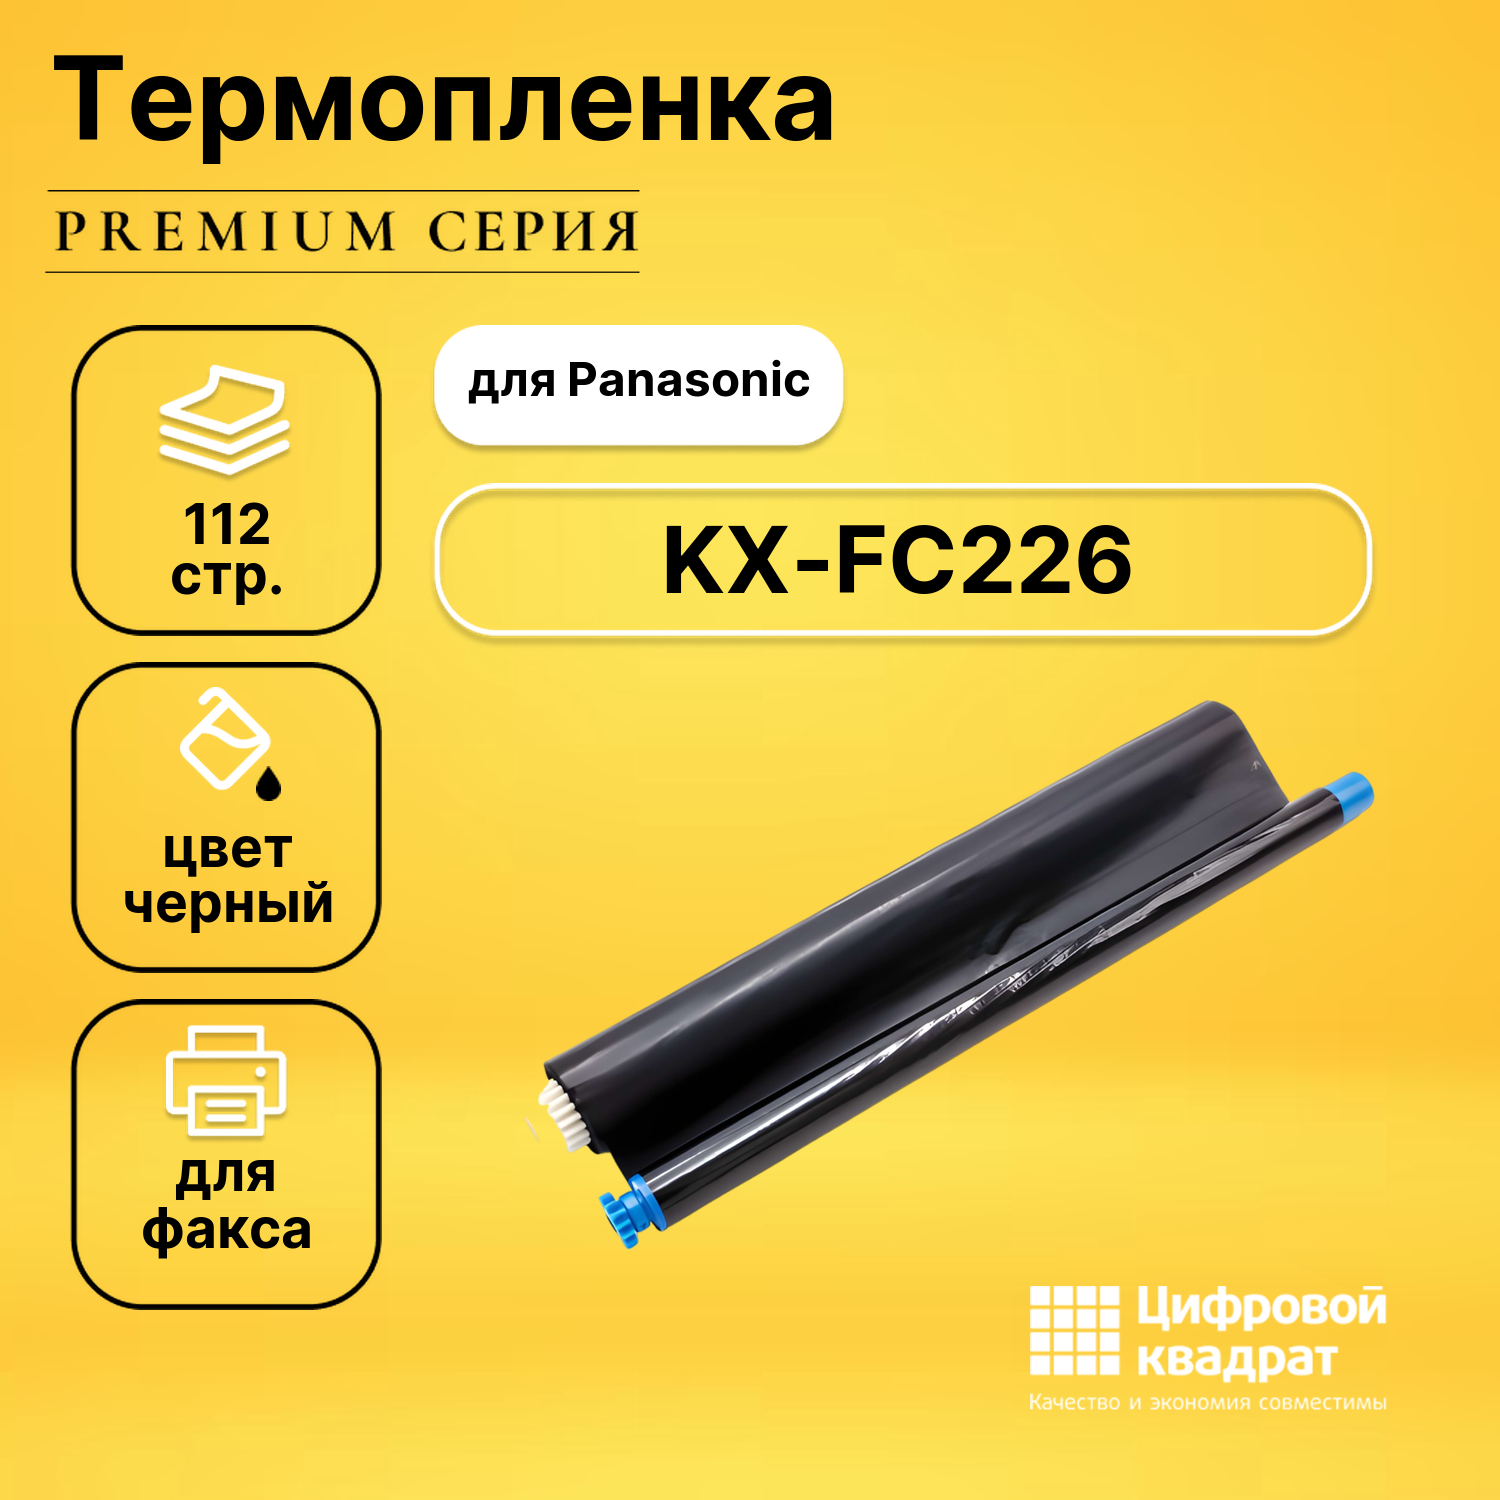 Термопленка DS для Panasonic KX-FC226 совместимая